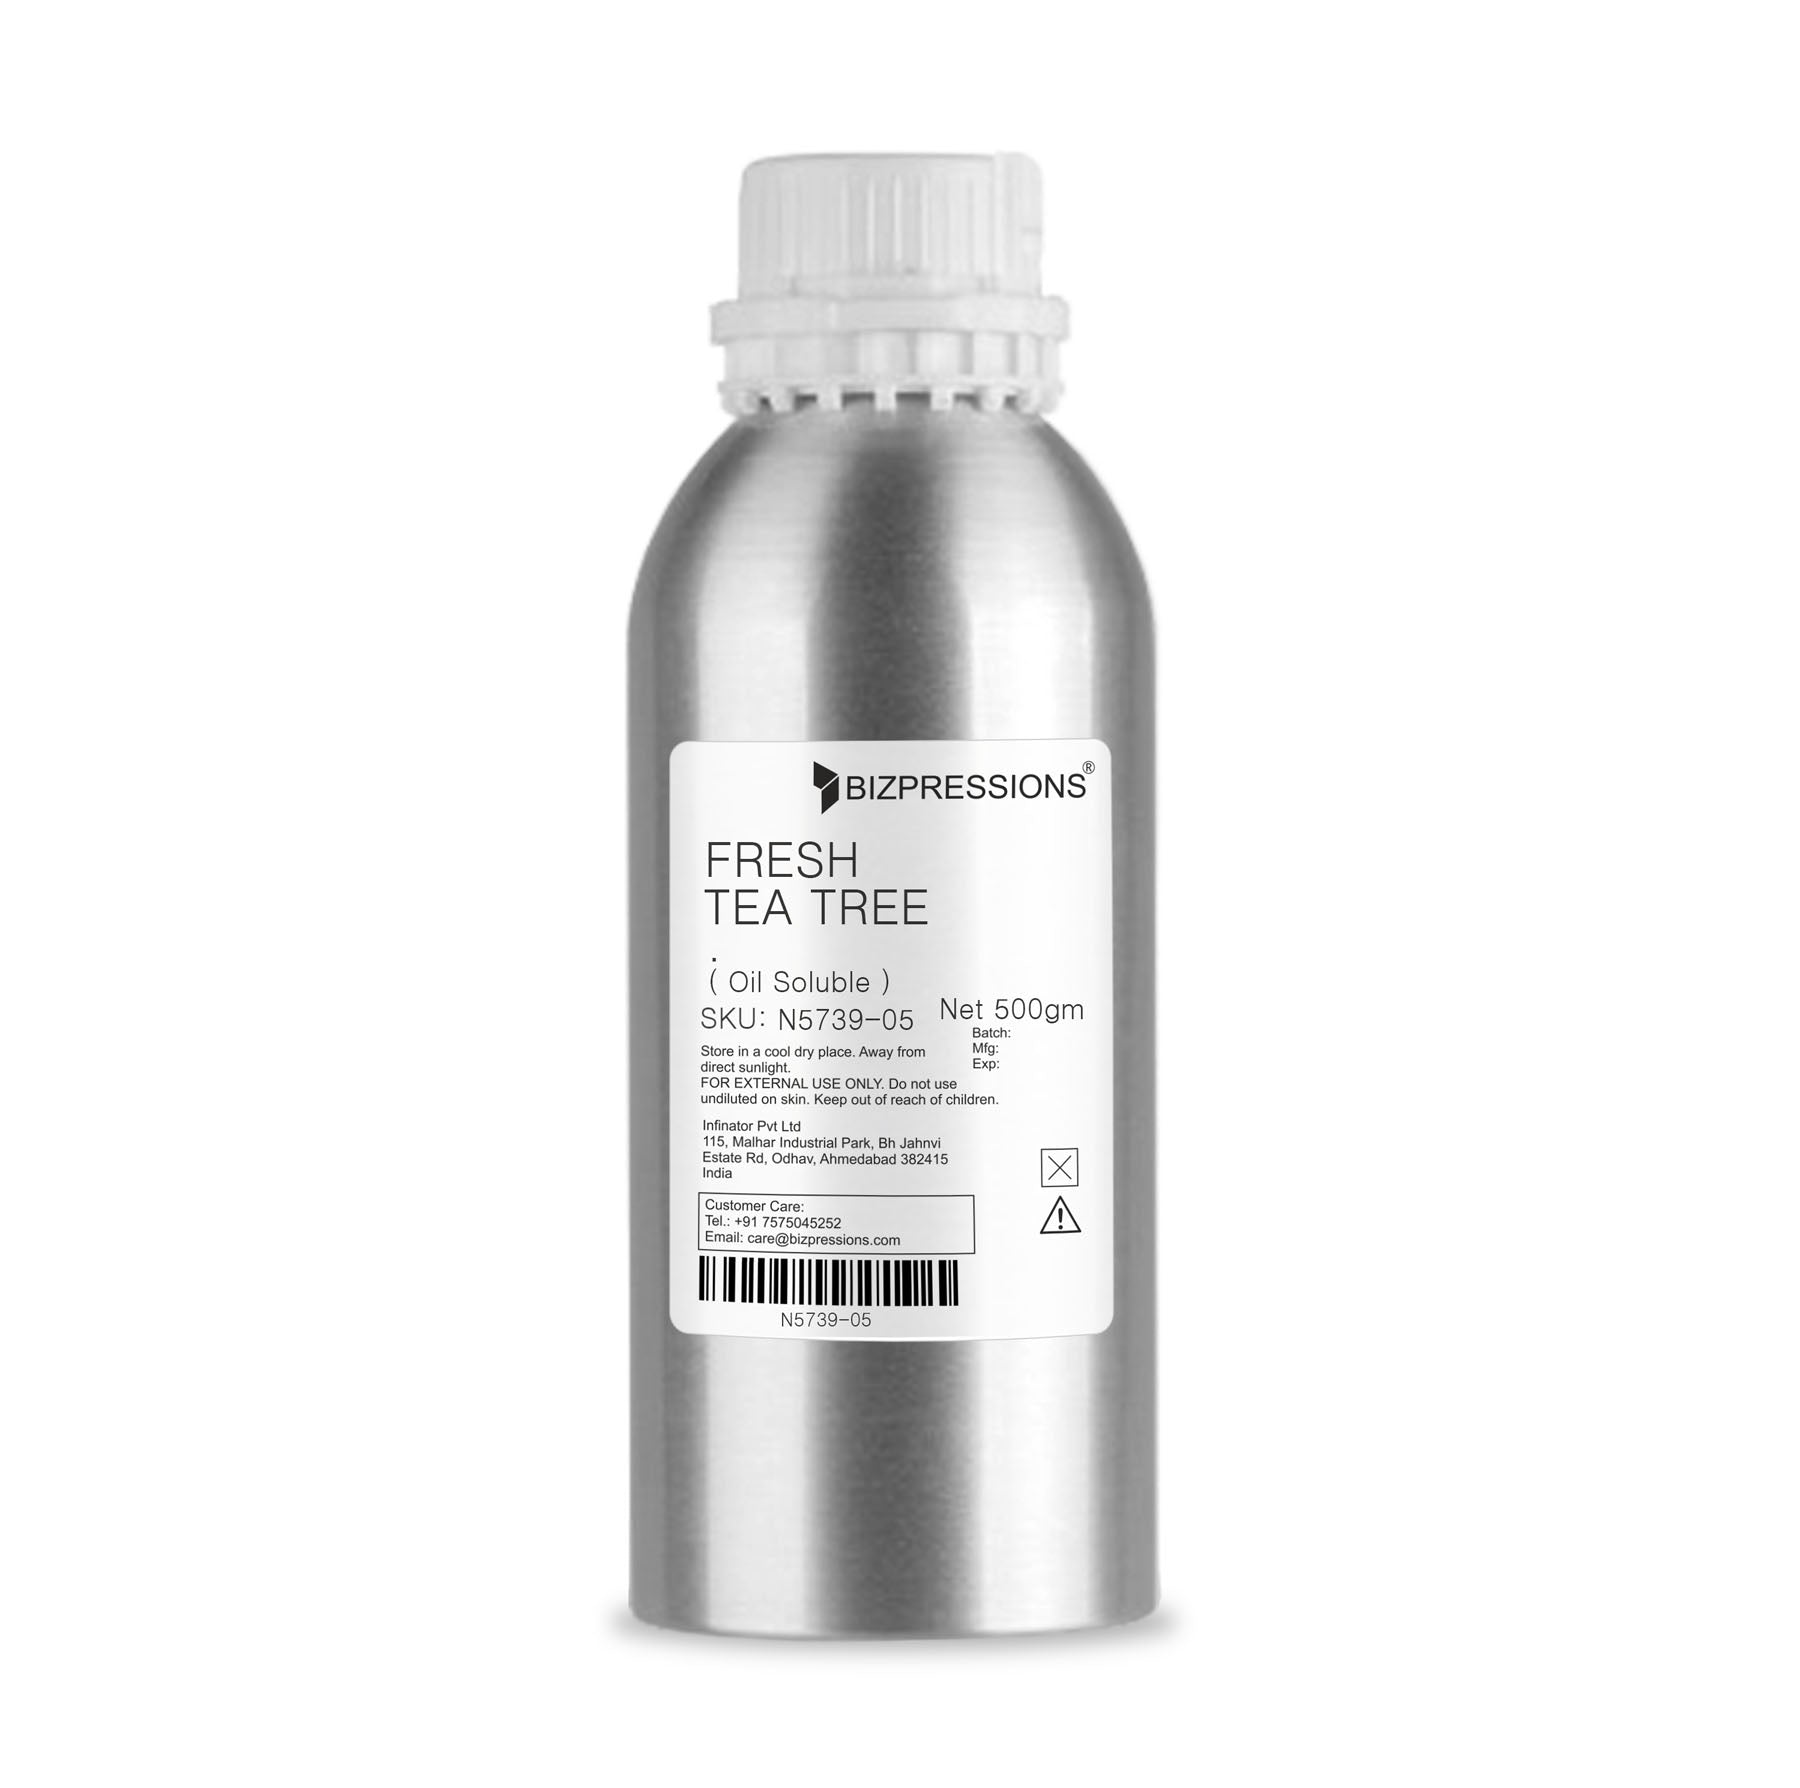 FRESH TEA TREE - Fragrance ( Oil Soluble ) - 500 gm